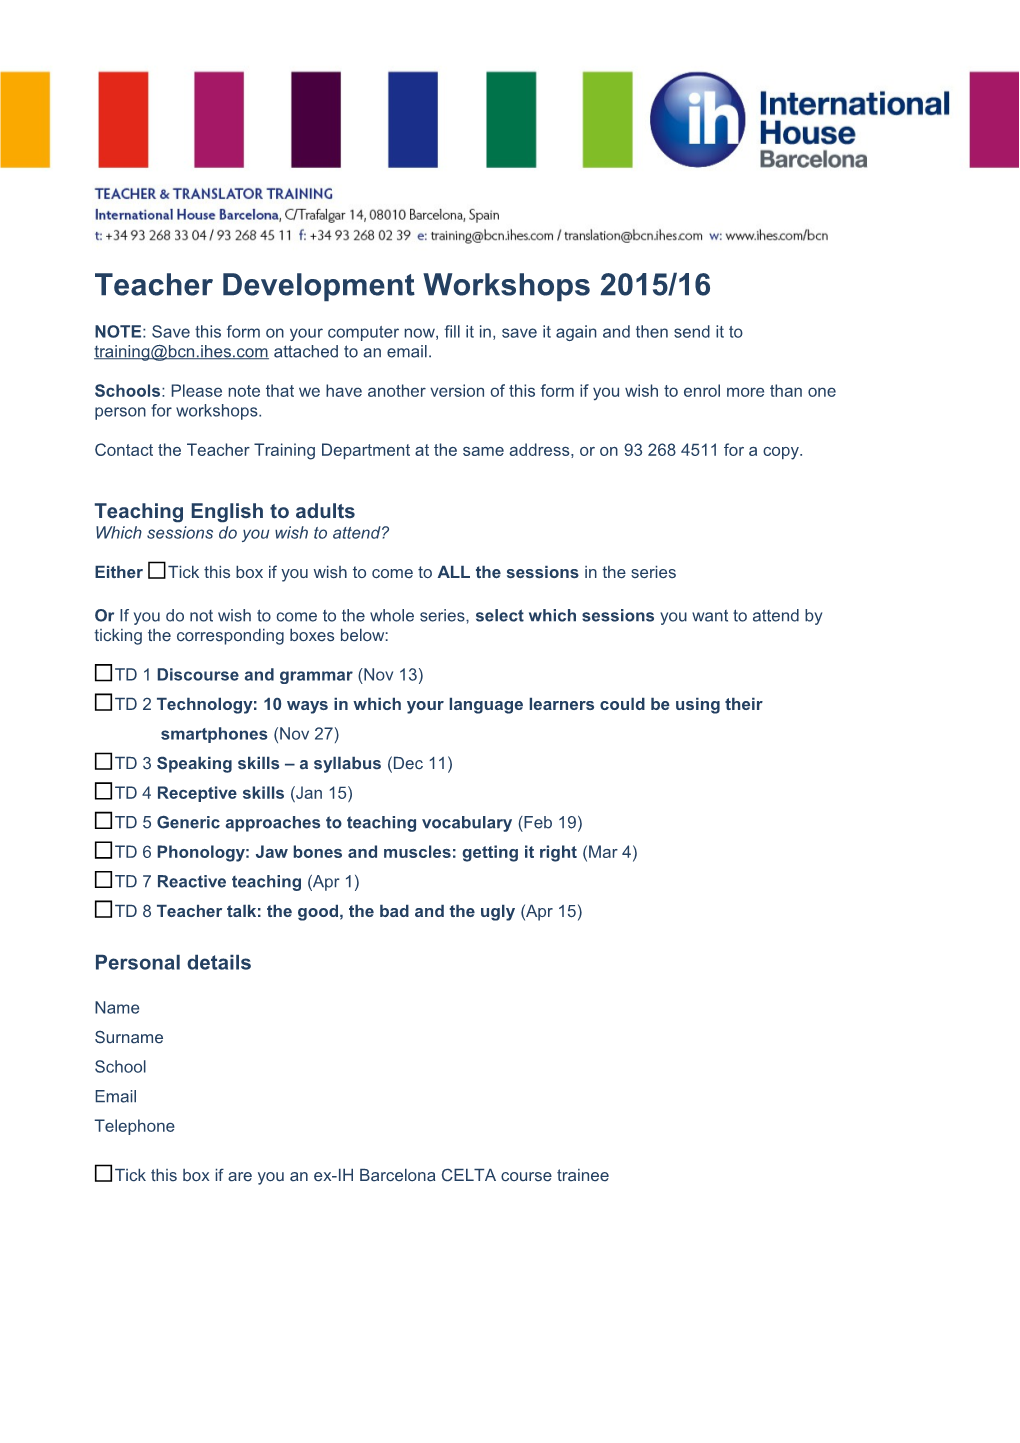 Teacher Development Workshops 2015/16